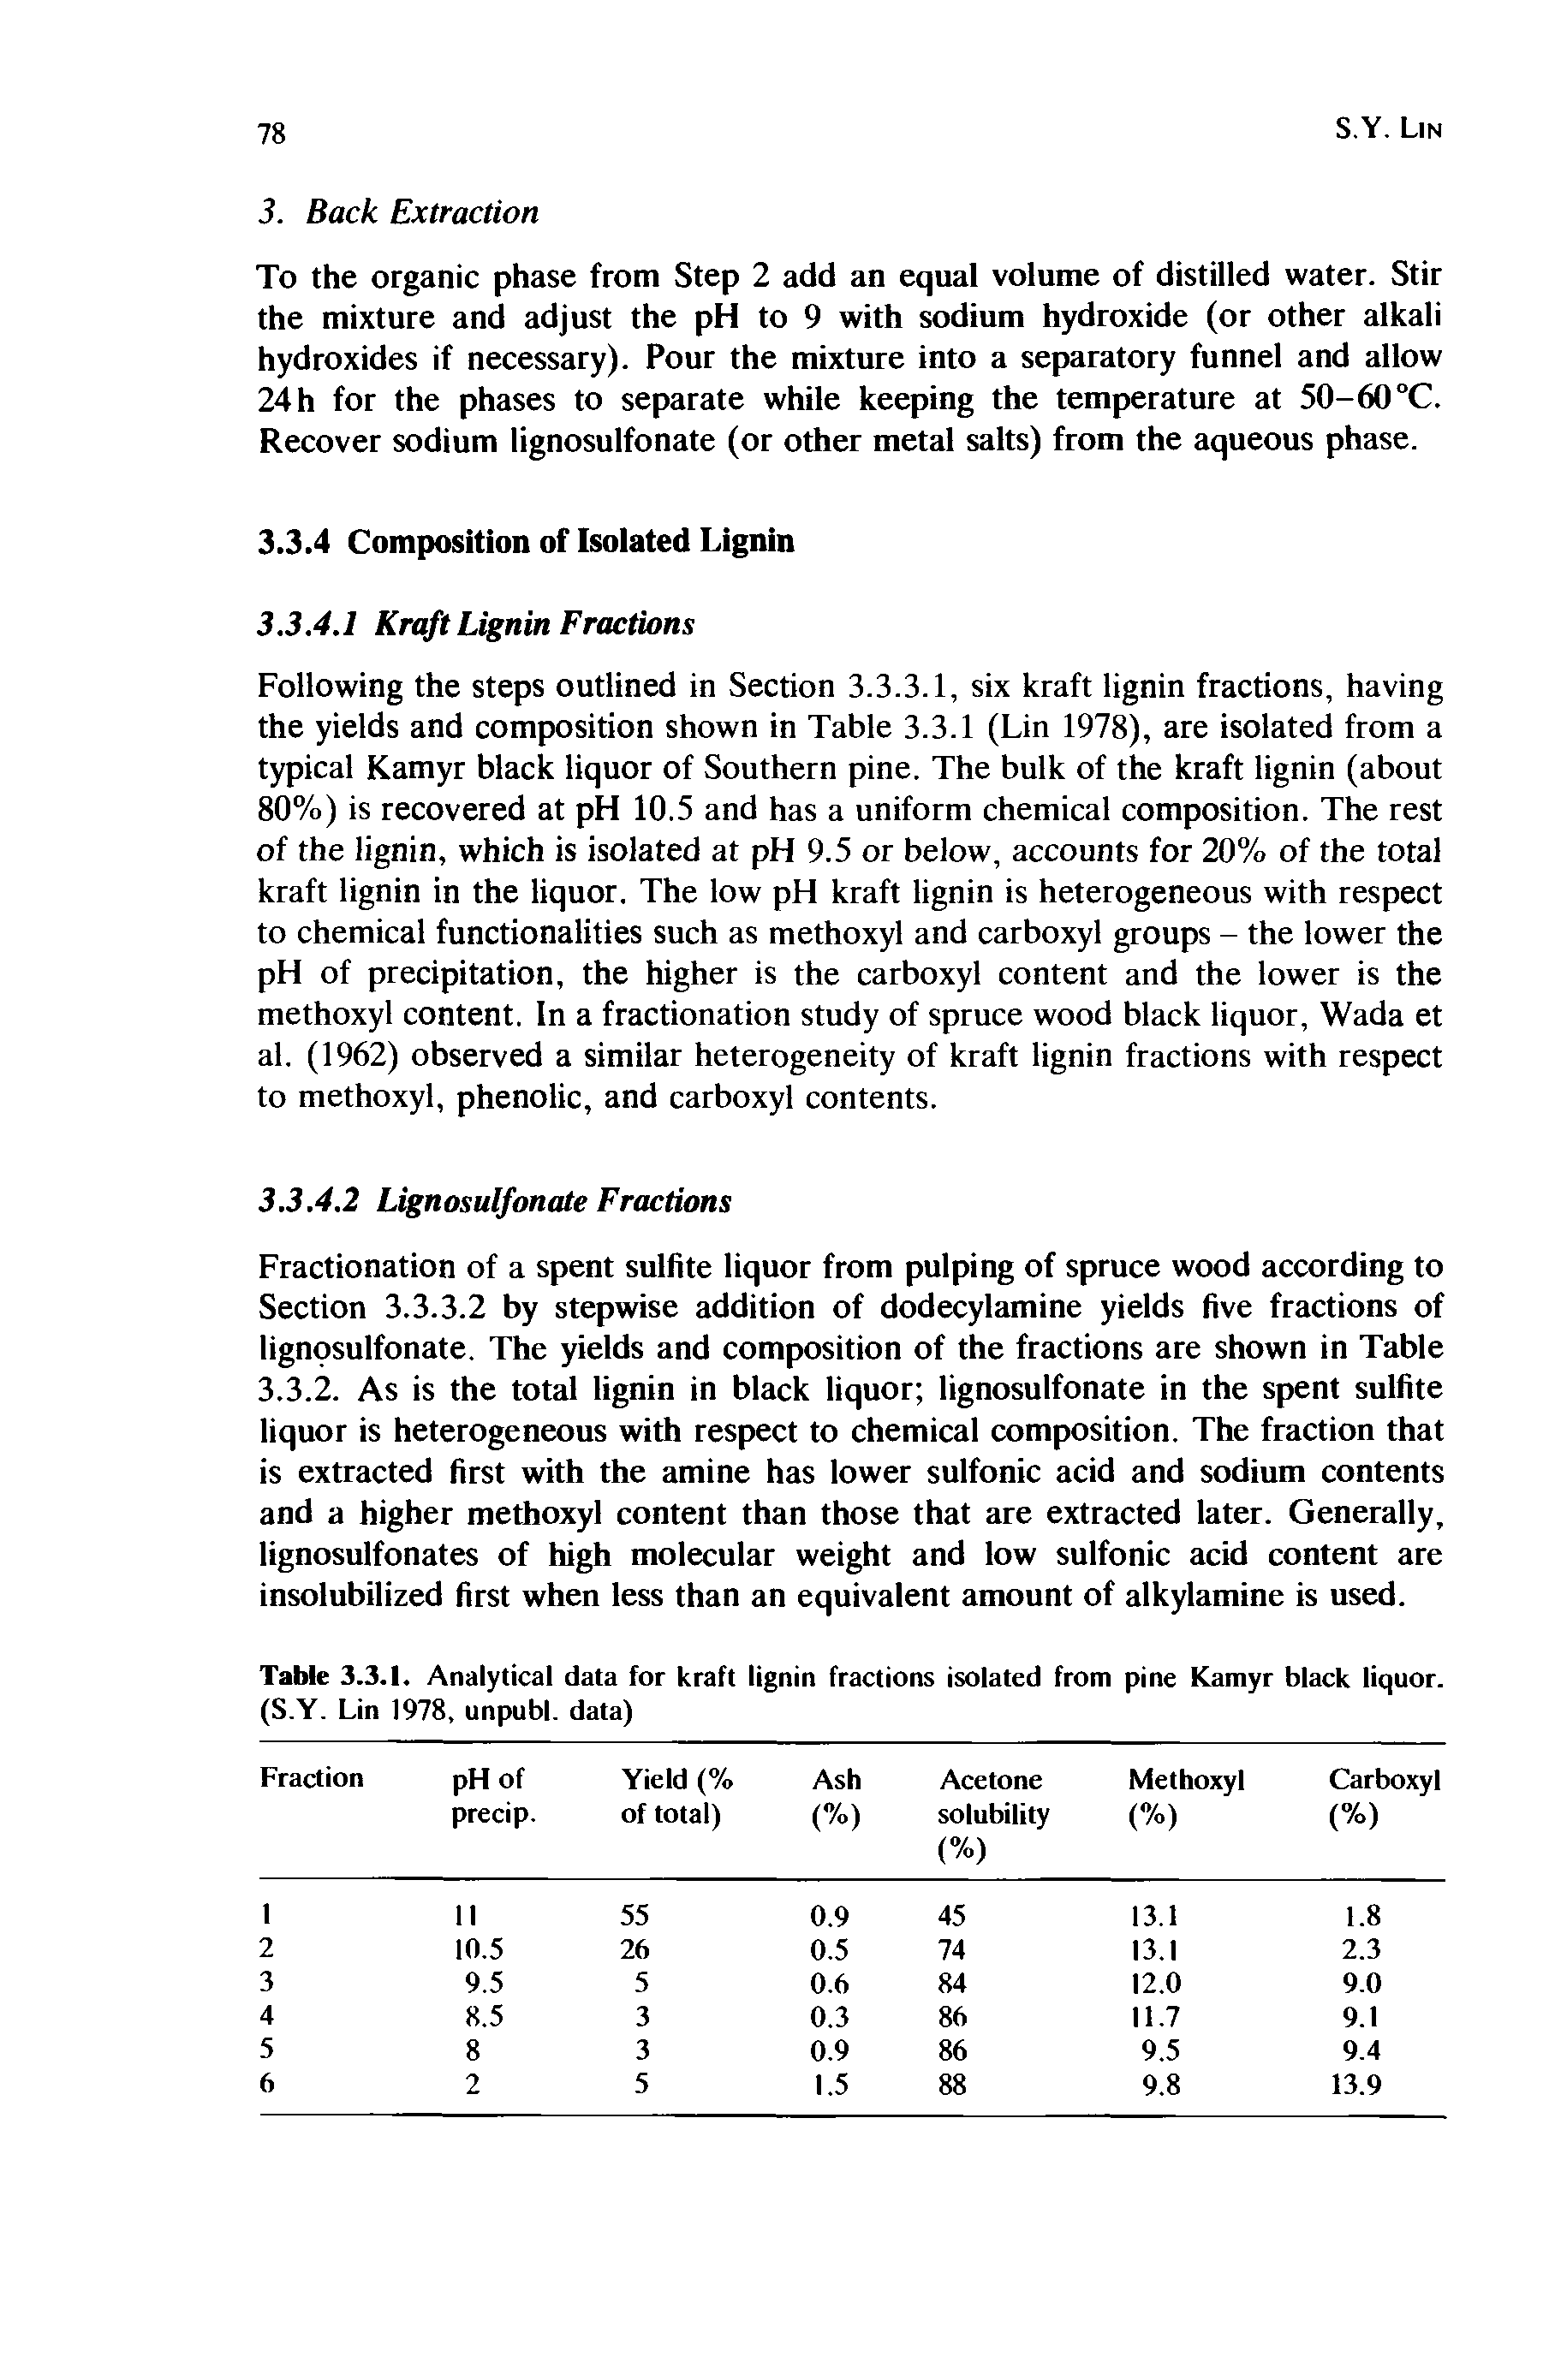 Table 3.3.1. Analytical data for kraft lignin fractions isolated from pine Kamyr black liquor. (S.Y. Lin 1978, unpubl. data)...